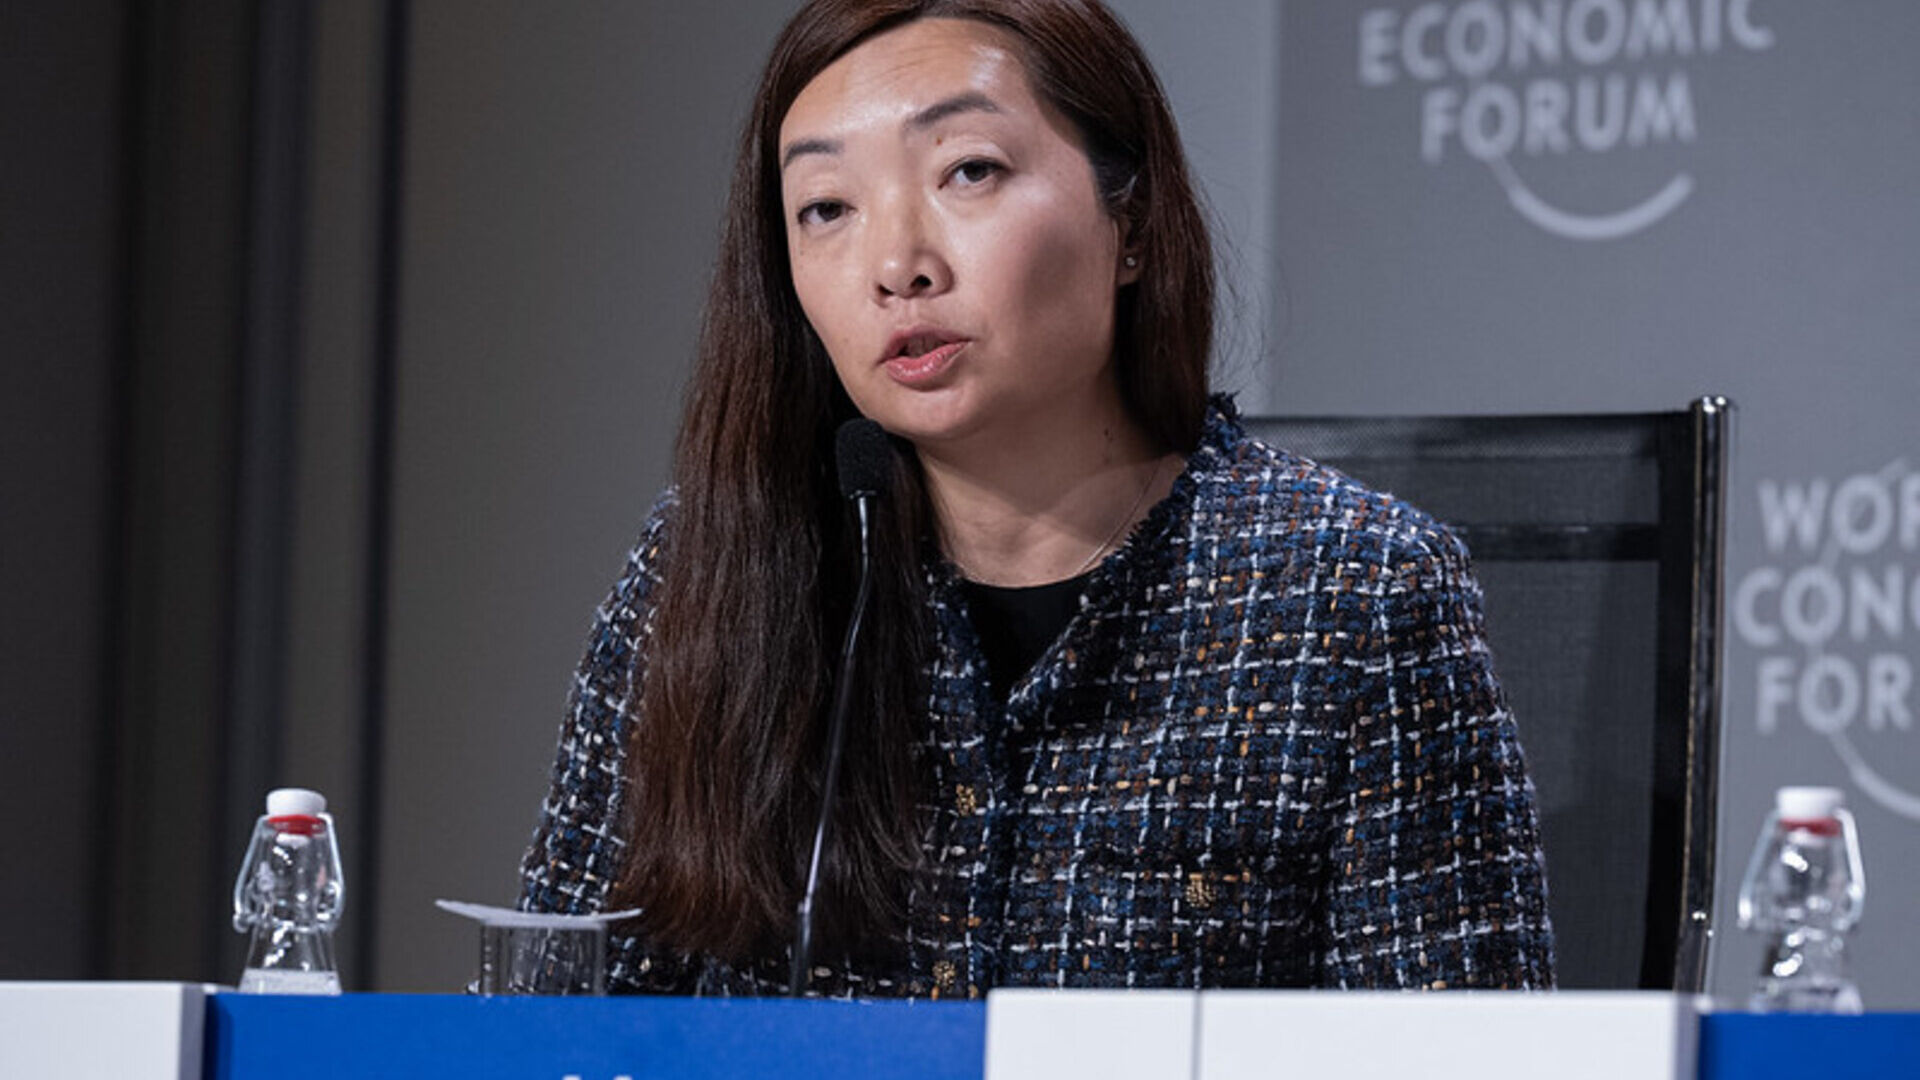 International Computation and AI Network: Cathy Li er sjef for AI, Data og Metavese ved World Economic Forum